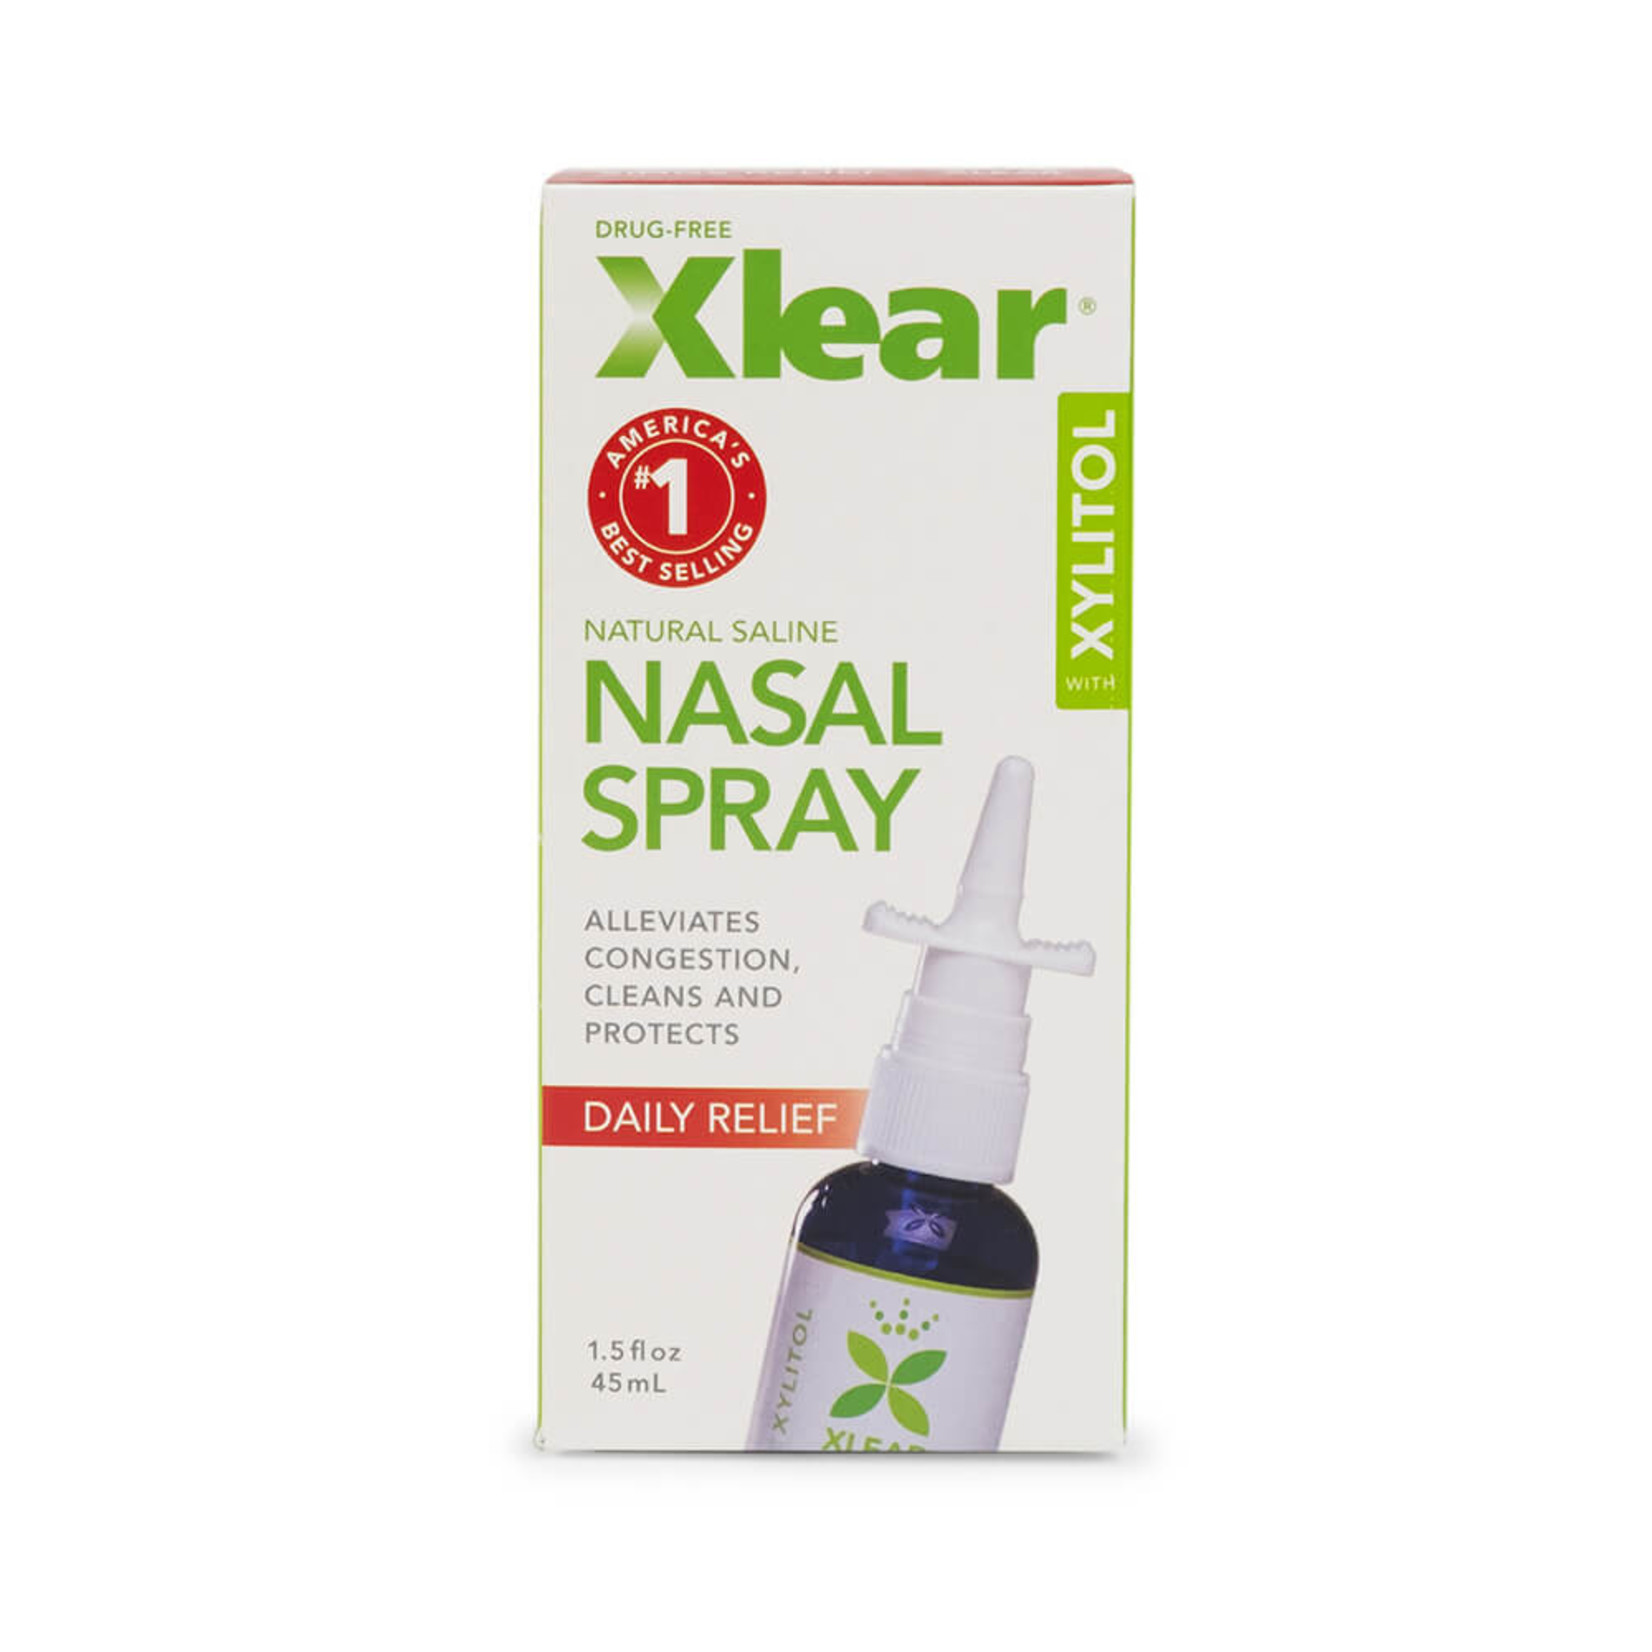 Xlear Xlear - All Natural Saline Nasal Spray - 1.5 oz